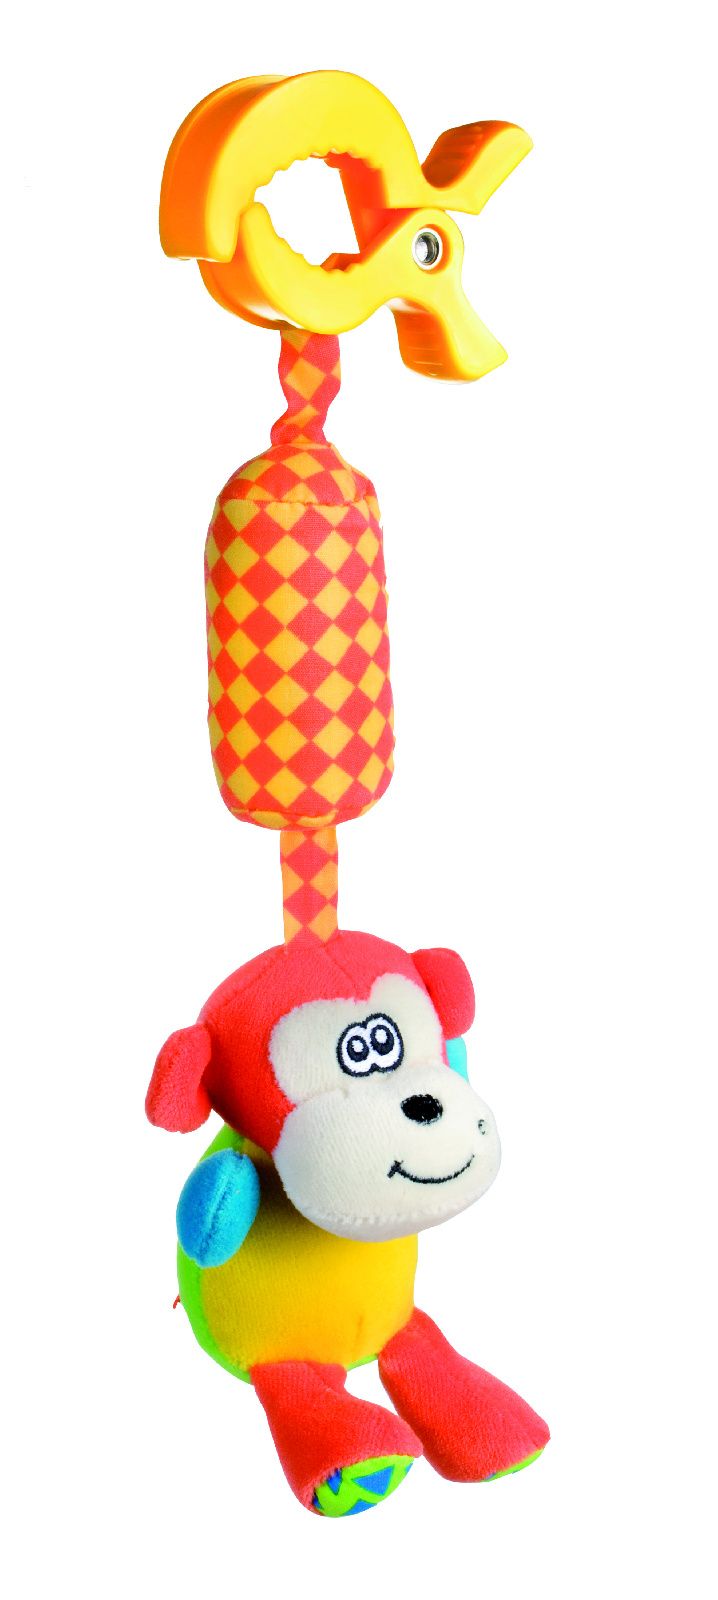 фото Игрушка мягкая подвесная с погремушкой canpol арт. 68/009, 0+, форма: обезьянка canpol babies